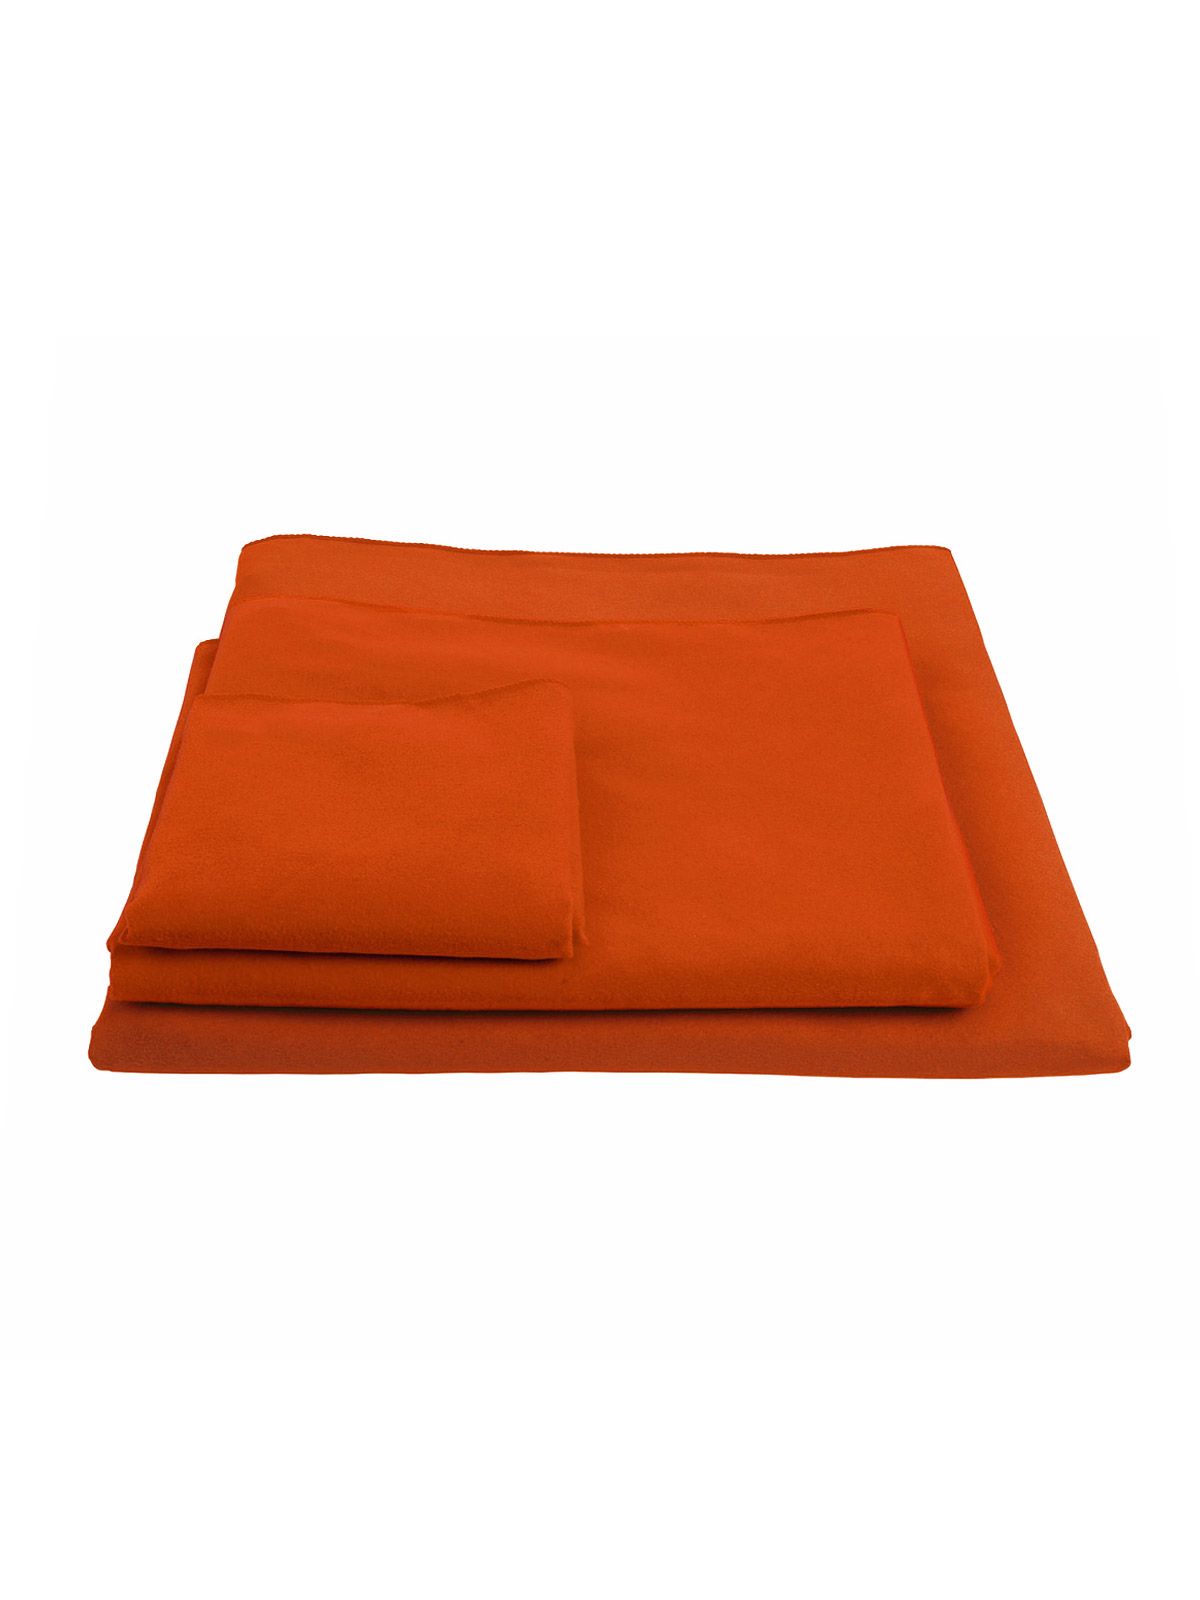 promo-towel-90x170-orange.webp